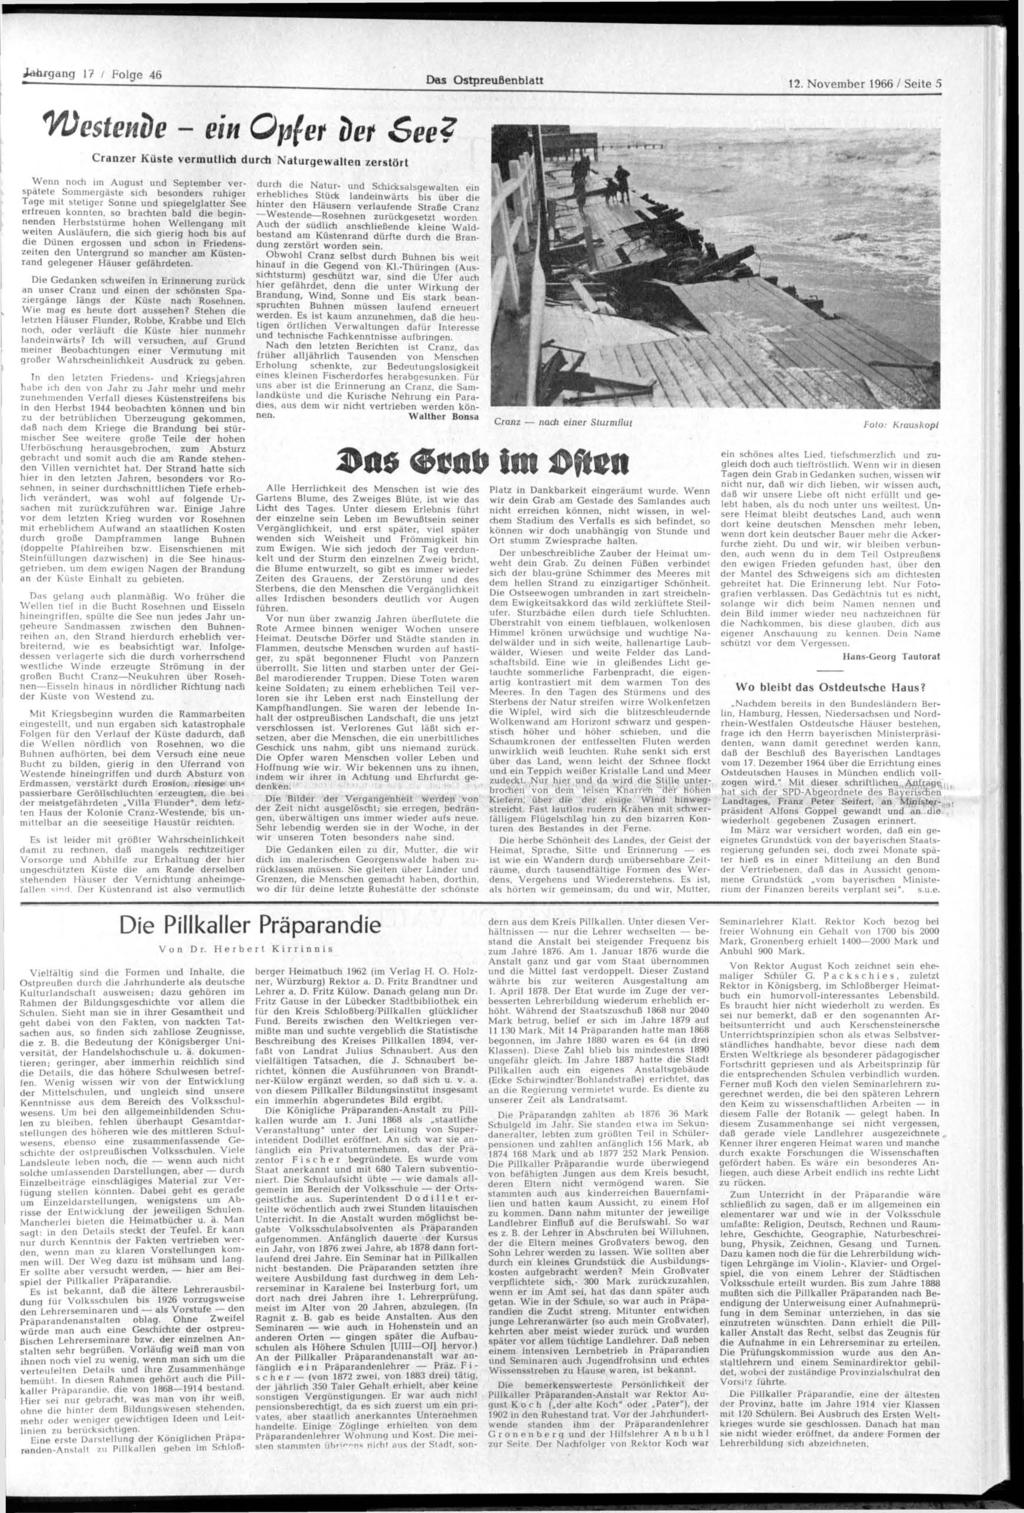 Jahrgang 17 / Folge 46 Das Ostpreußenblatt 12. November 1966 / Seite 5 Westende - ein Opfer Der S e e?